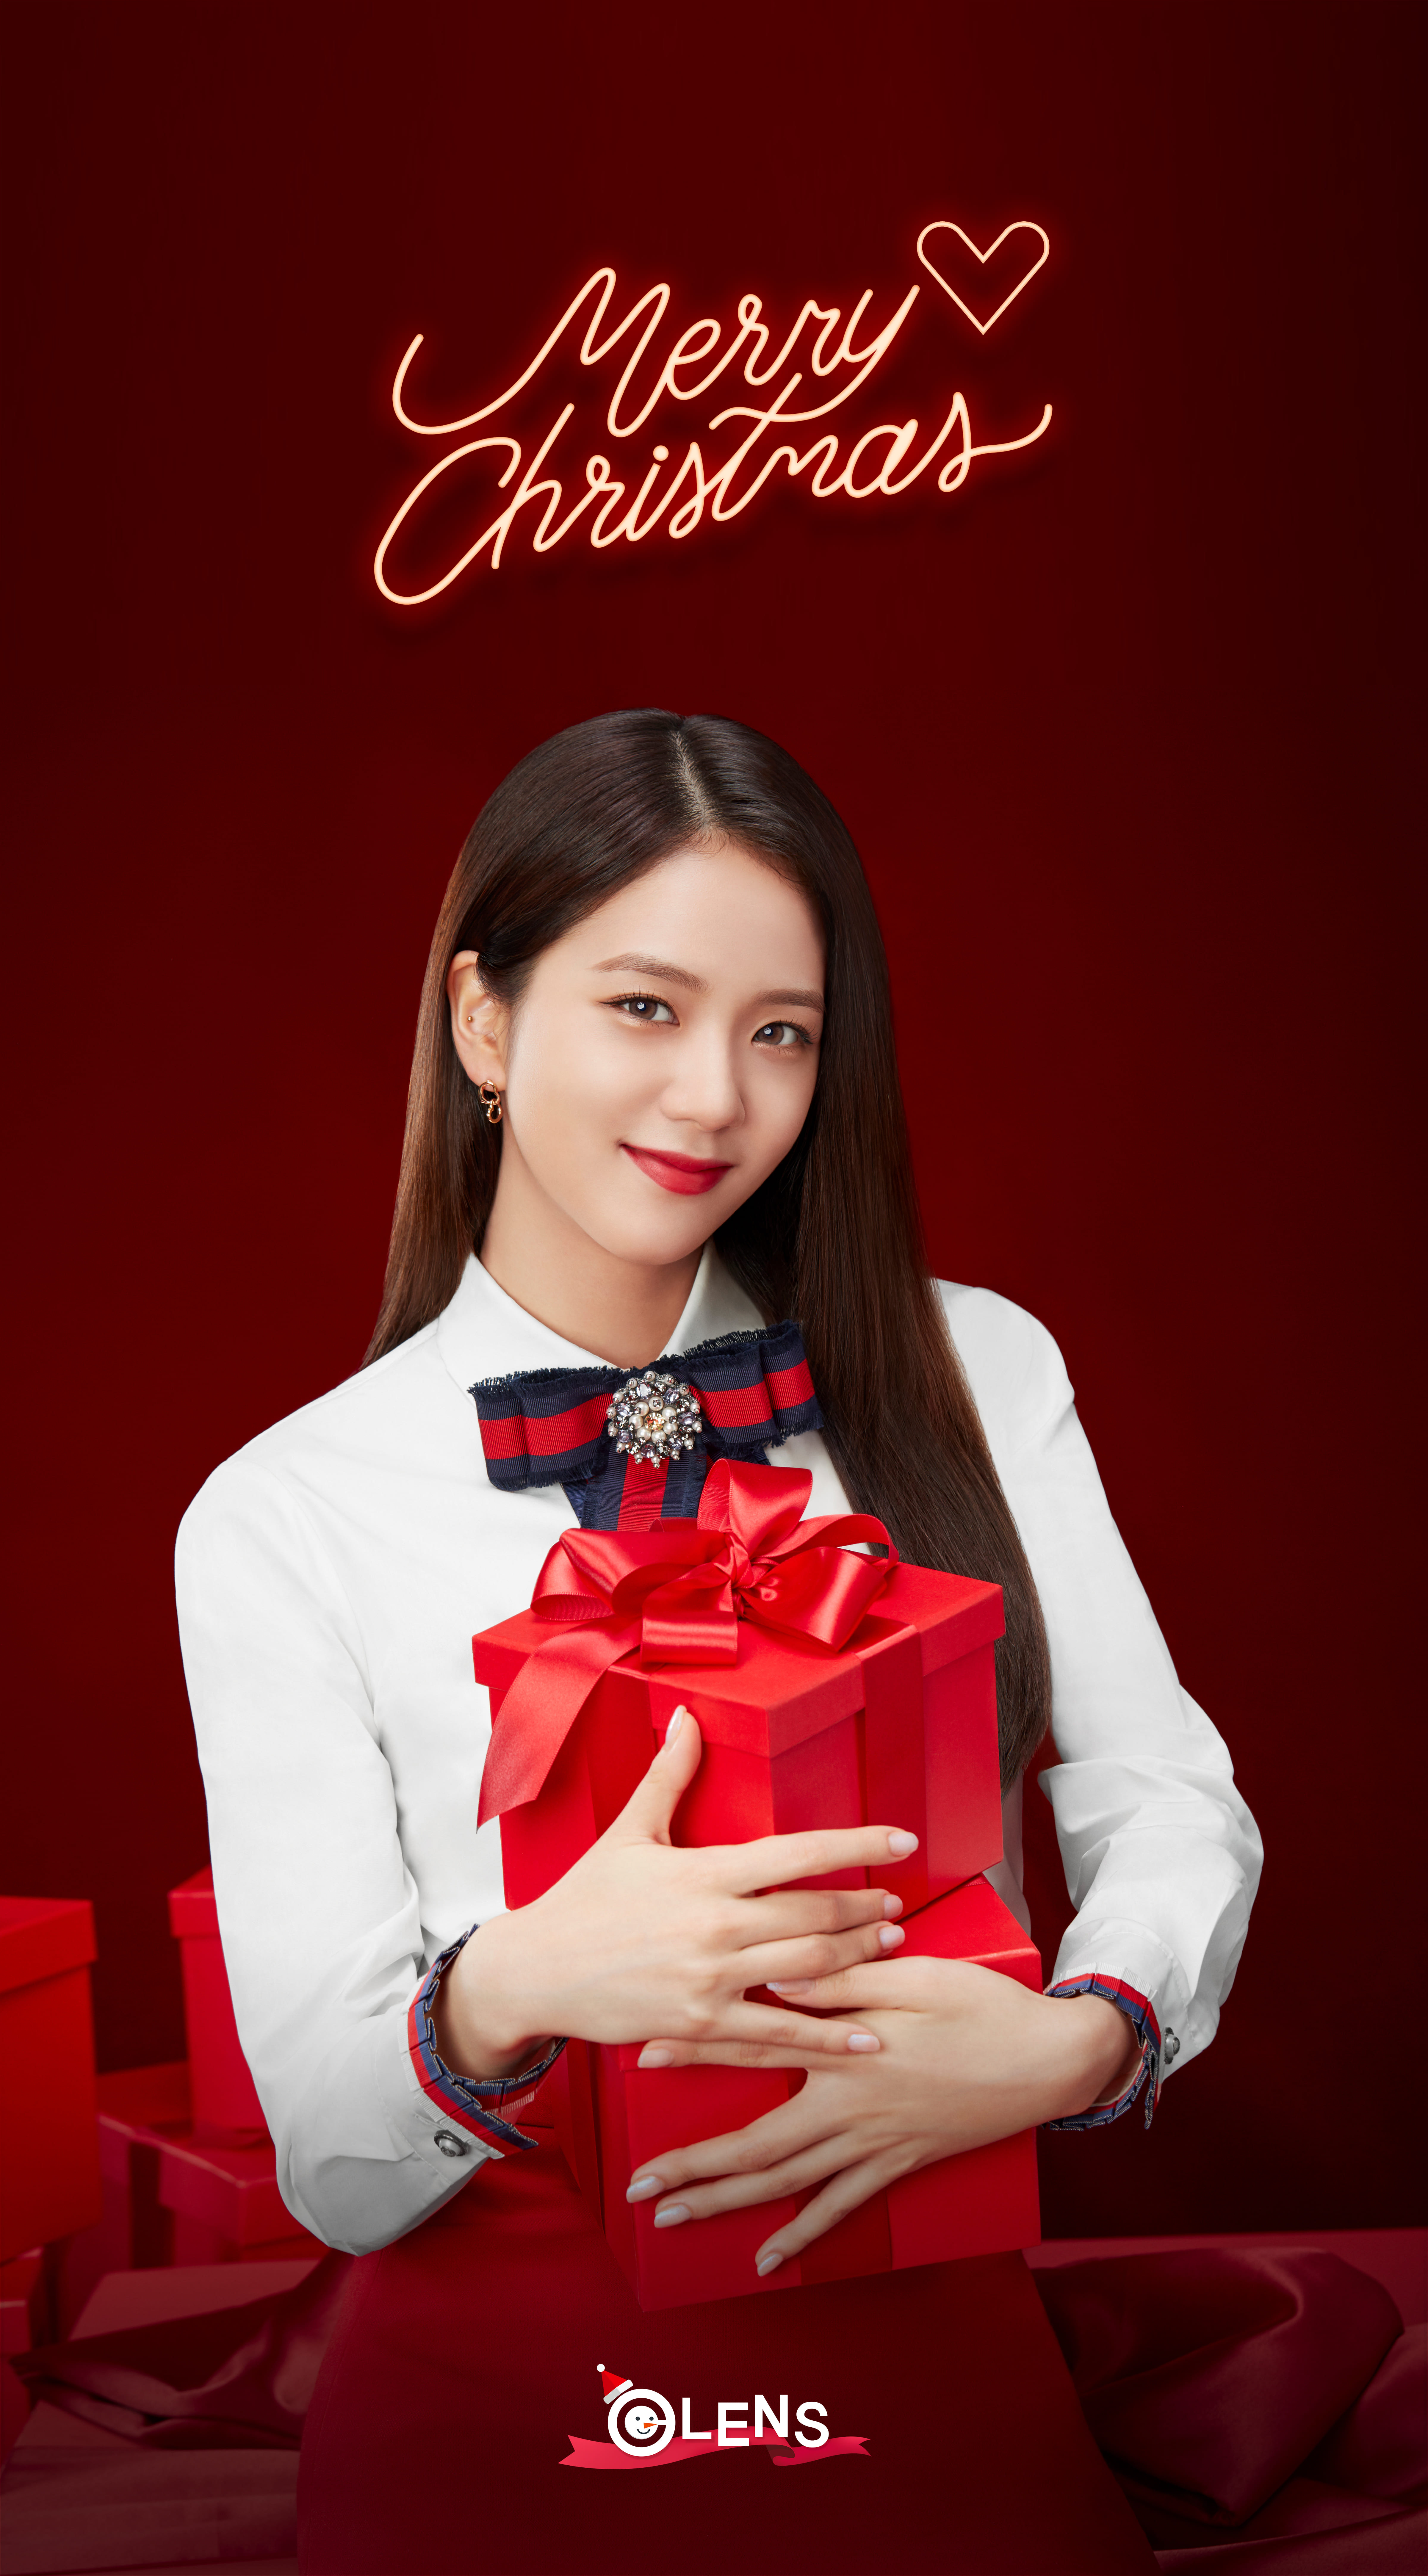 christmas wallpaper,red,thumb,fashion accessory,formal wear